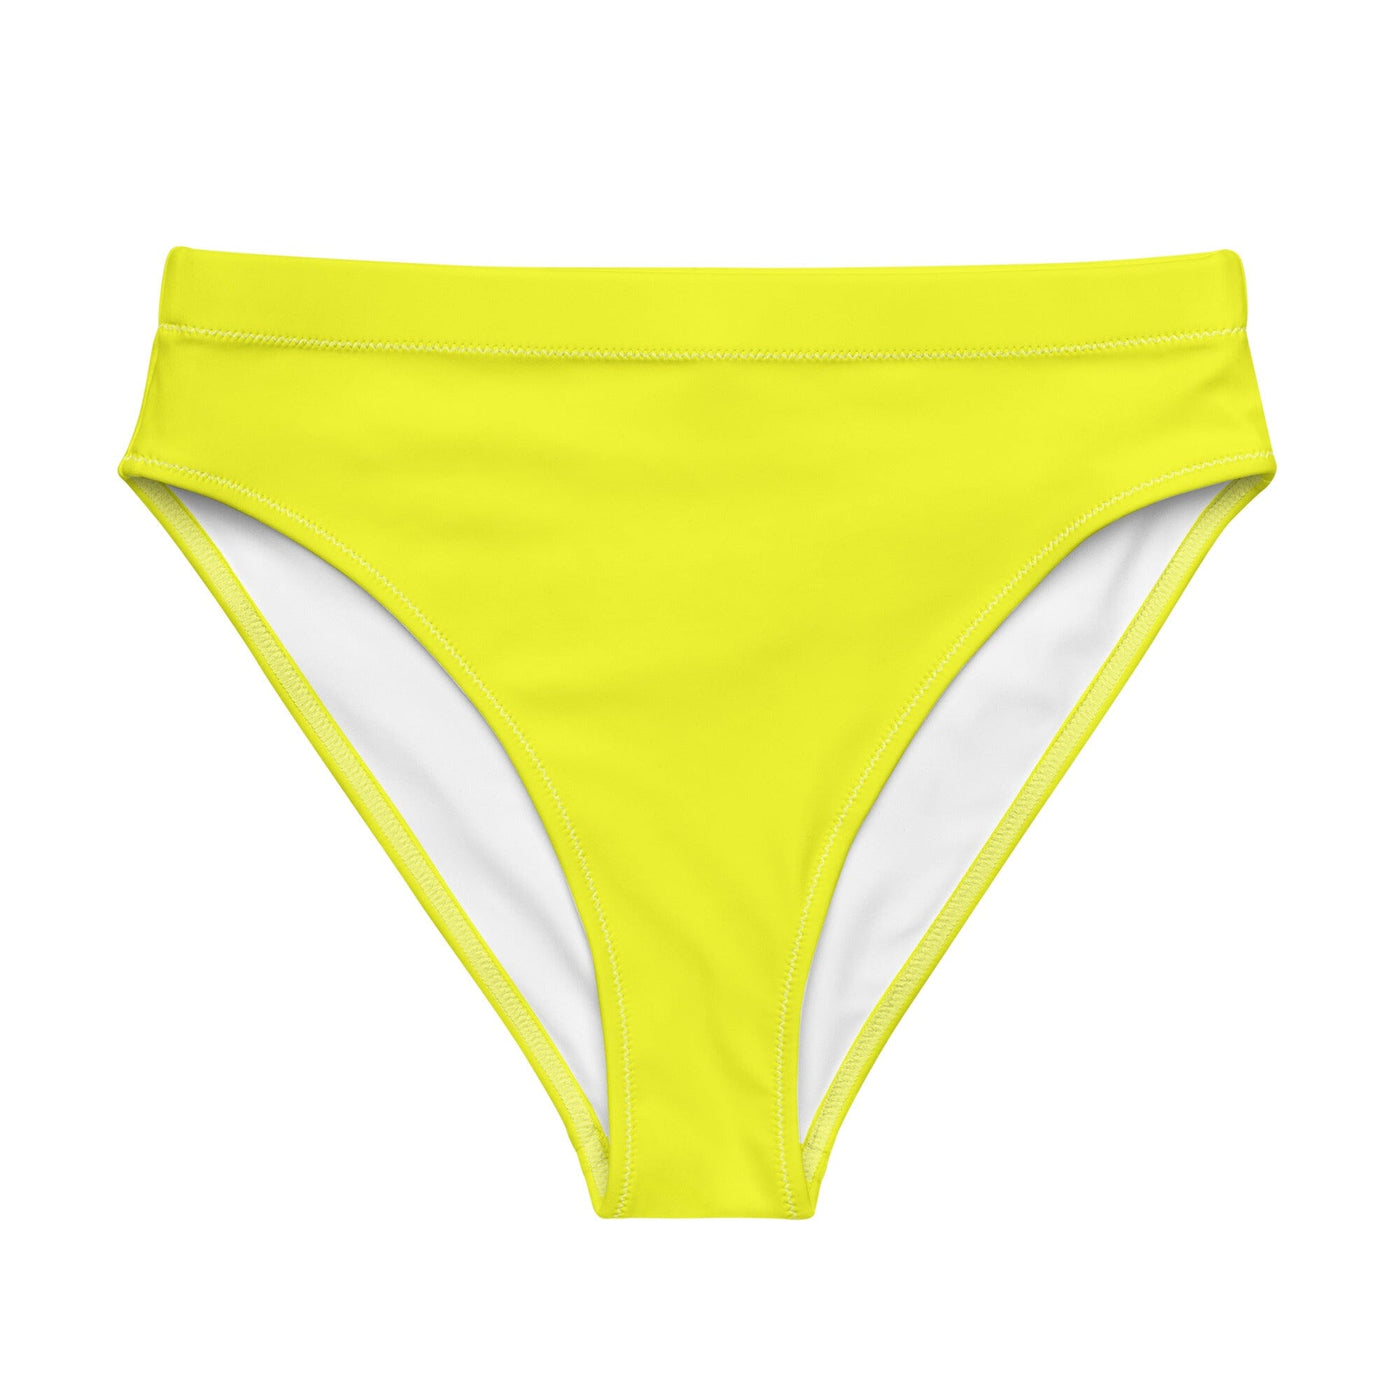 Yellow Solid Bikini Bottom - Coastal Cool - Swimwear and Beachwear - Recycled fabrics